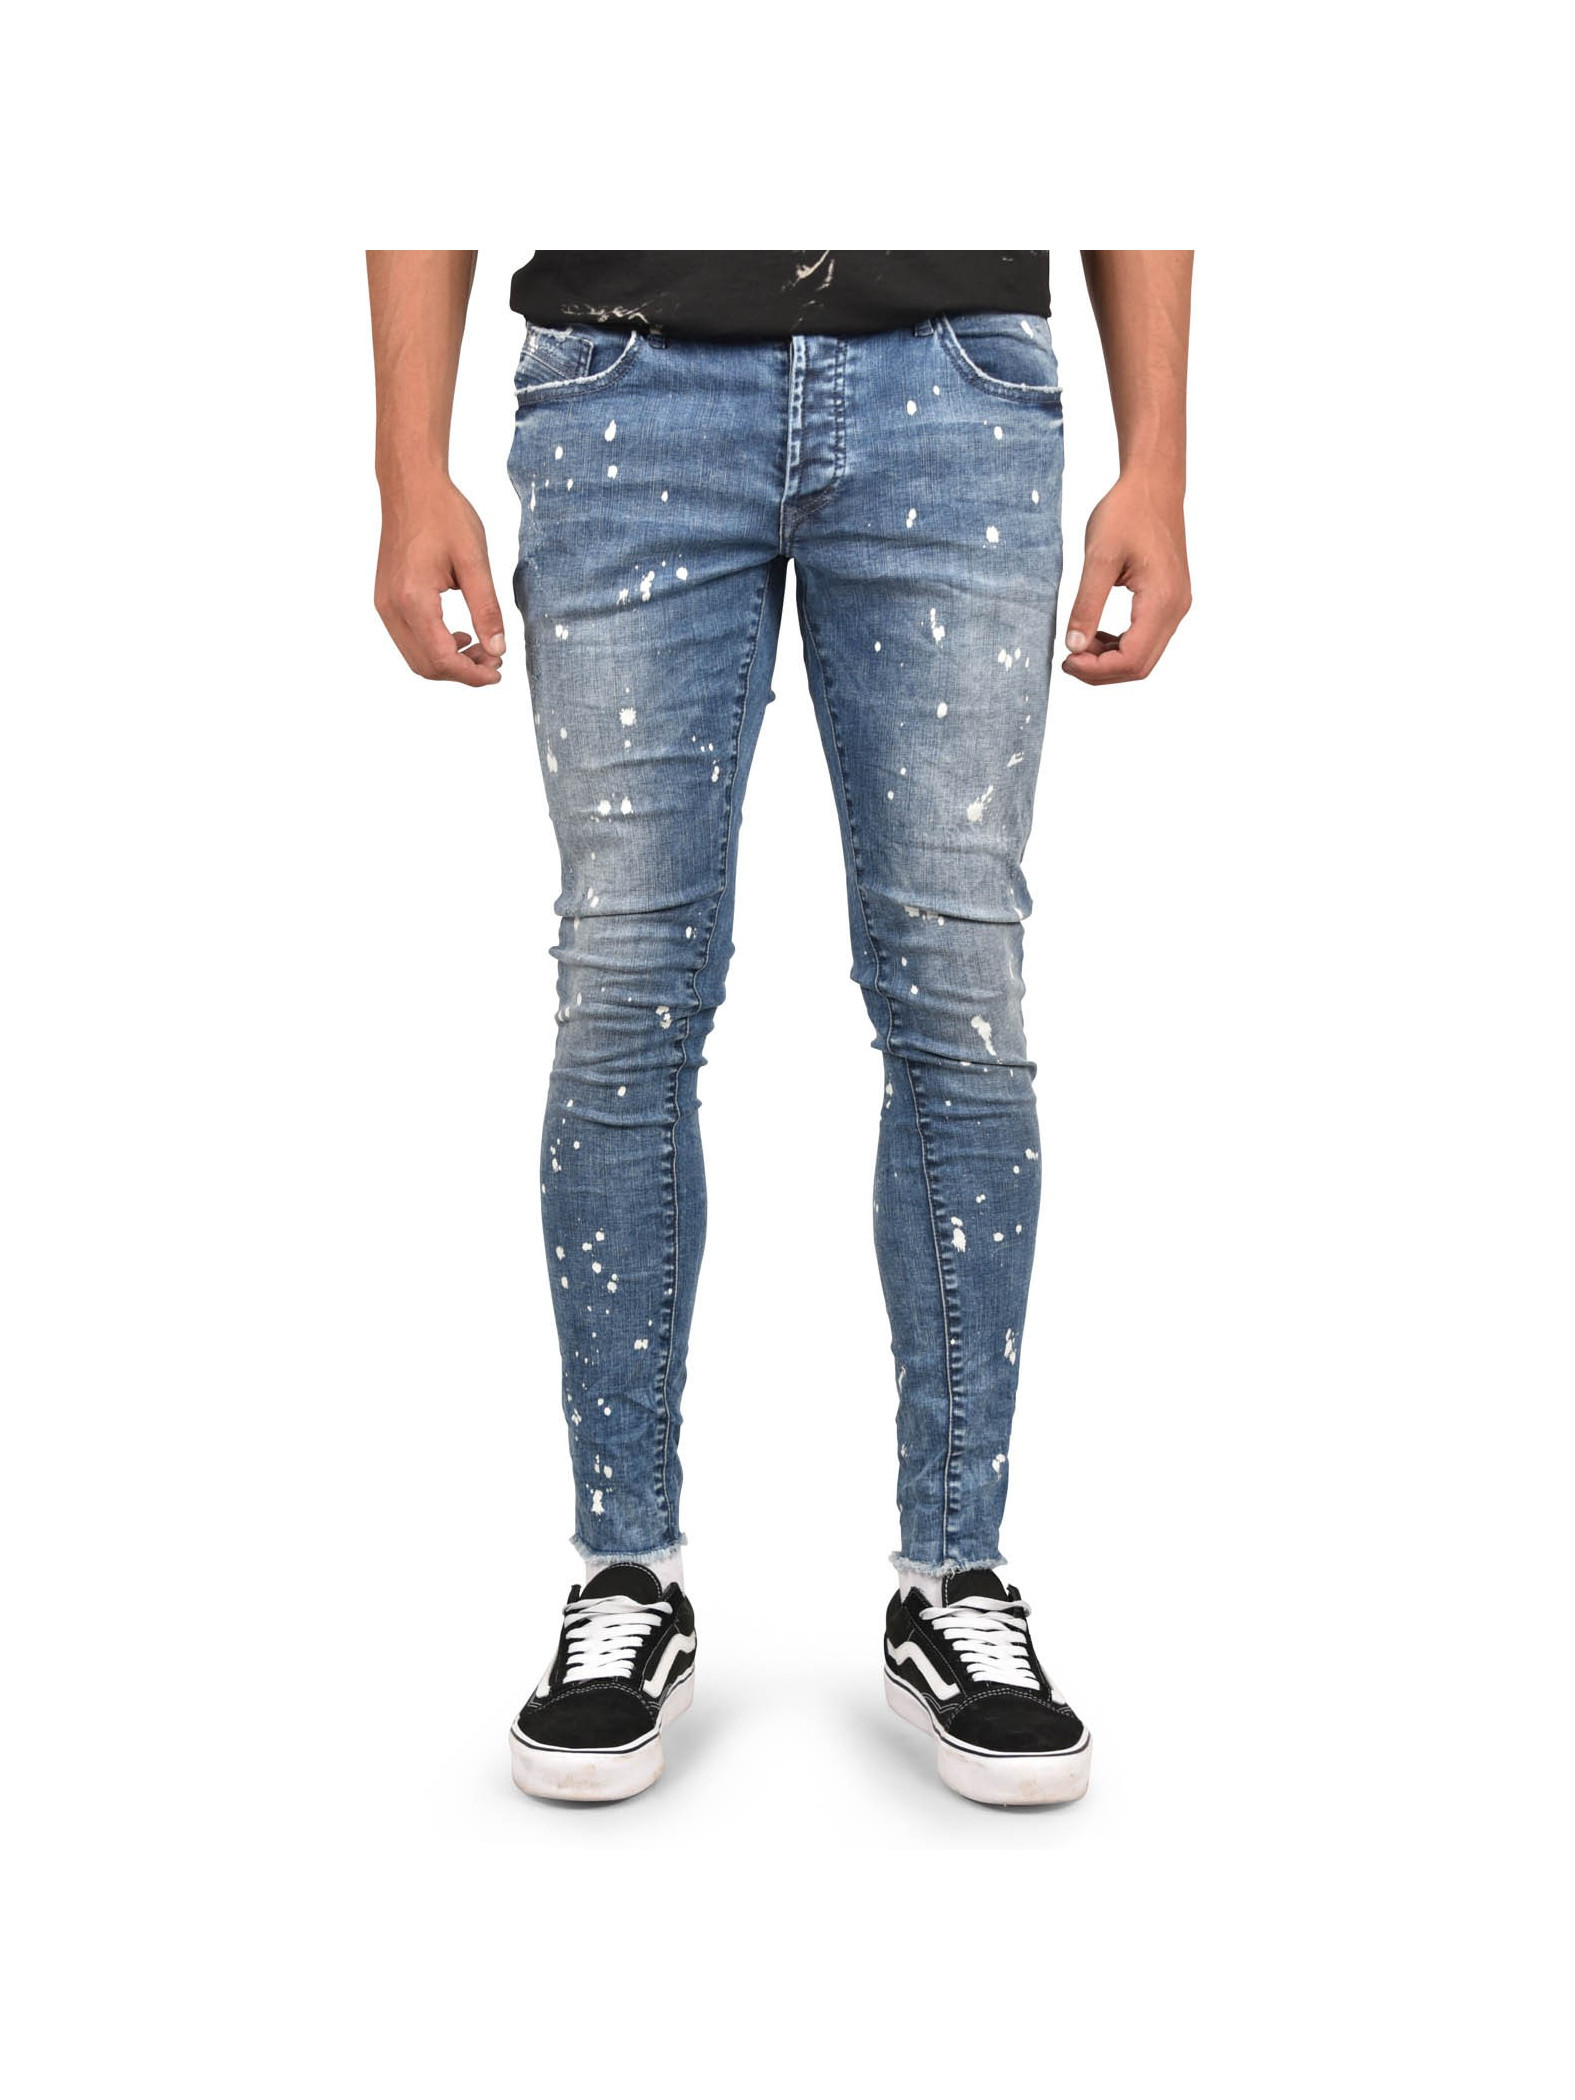 blue jeans design